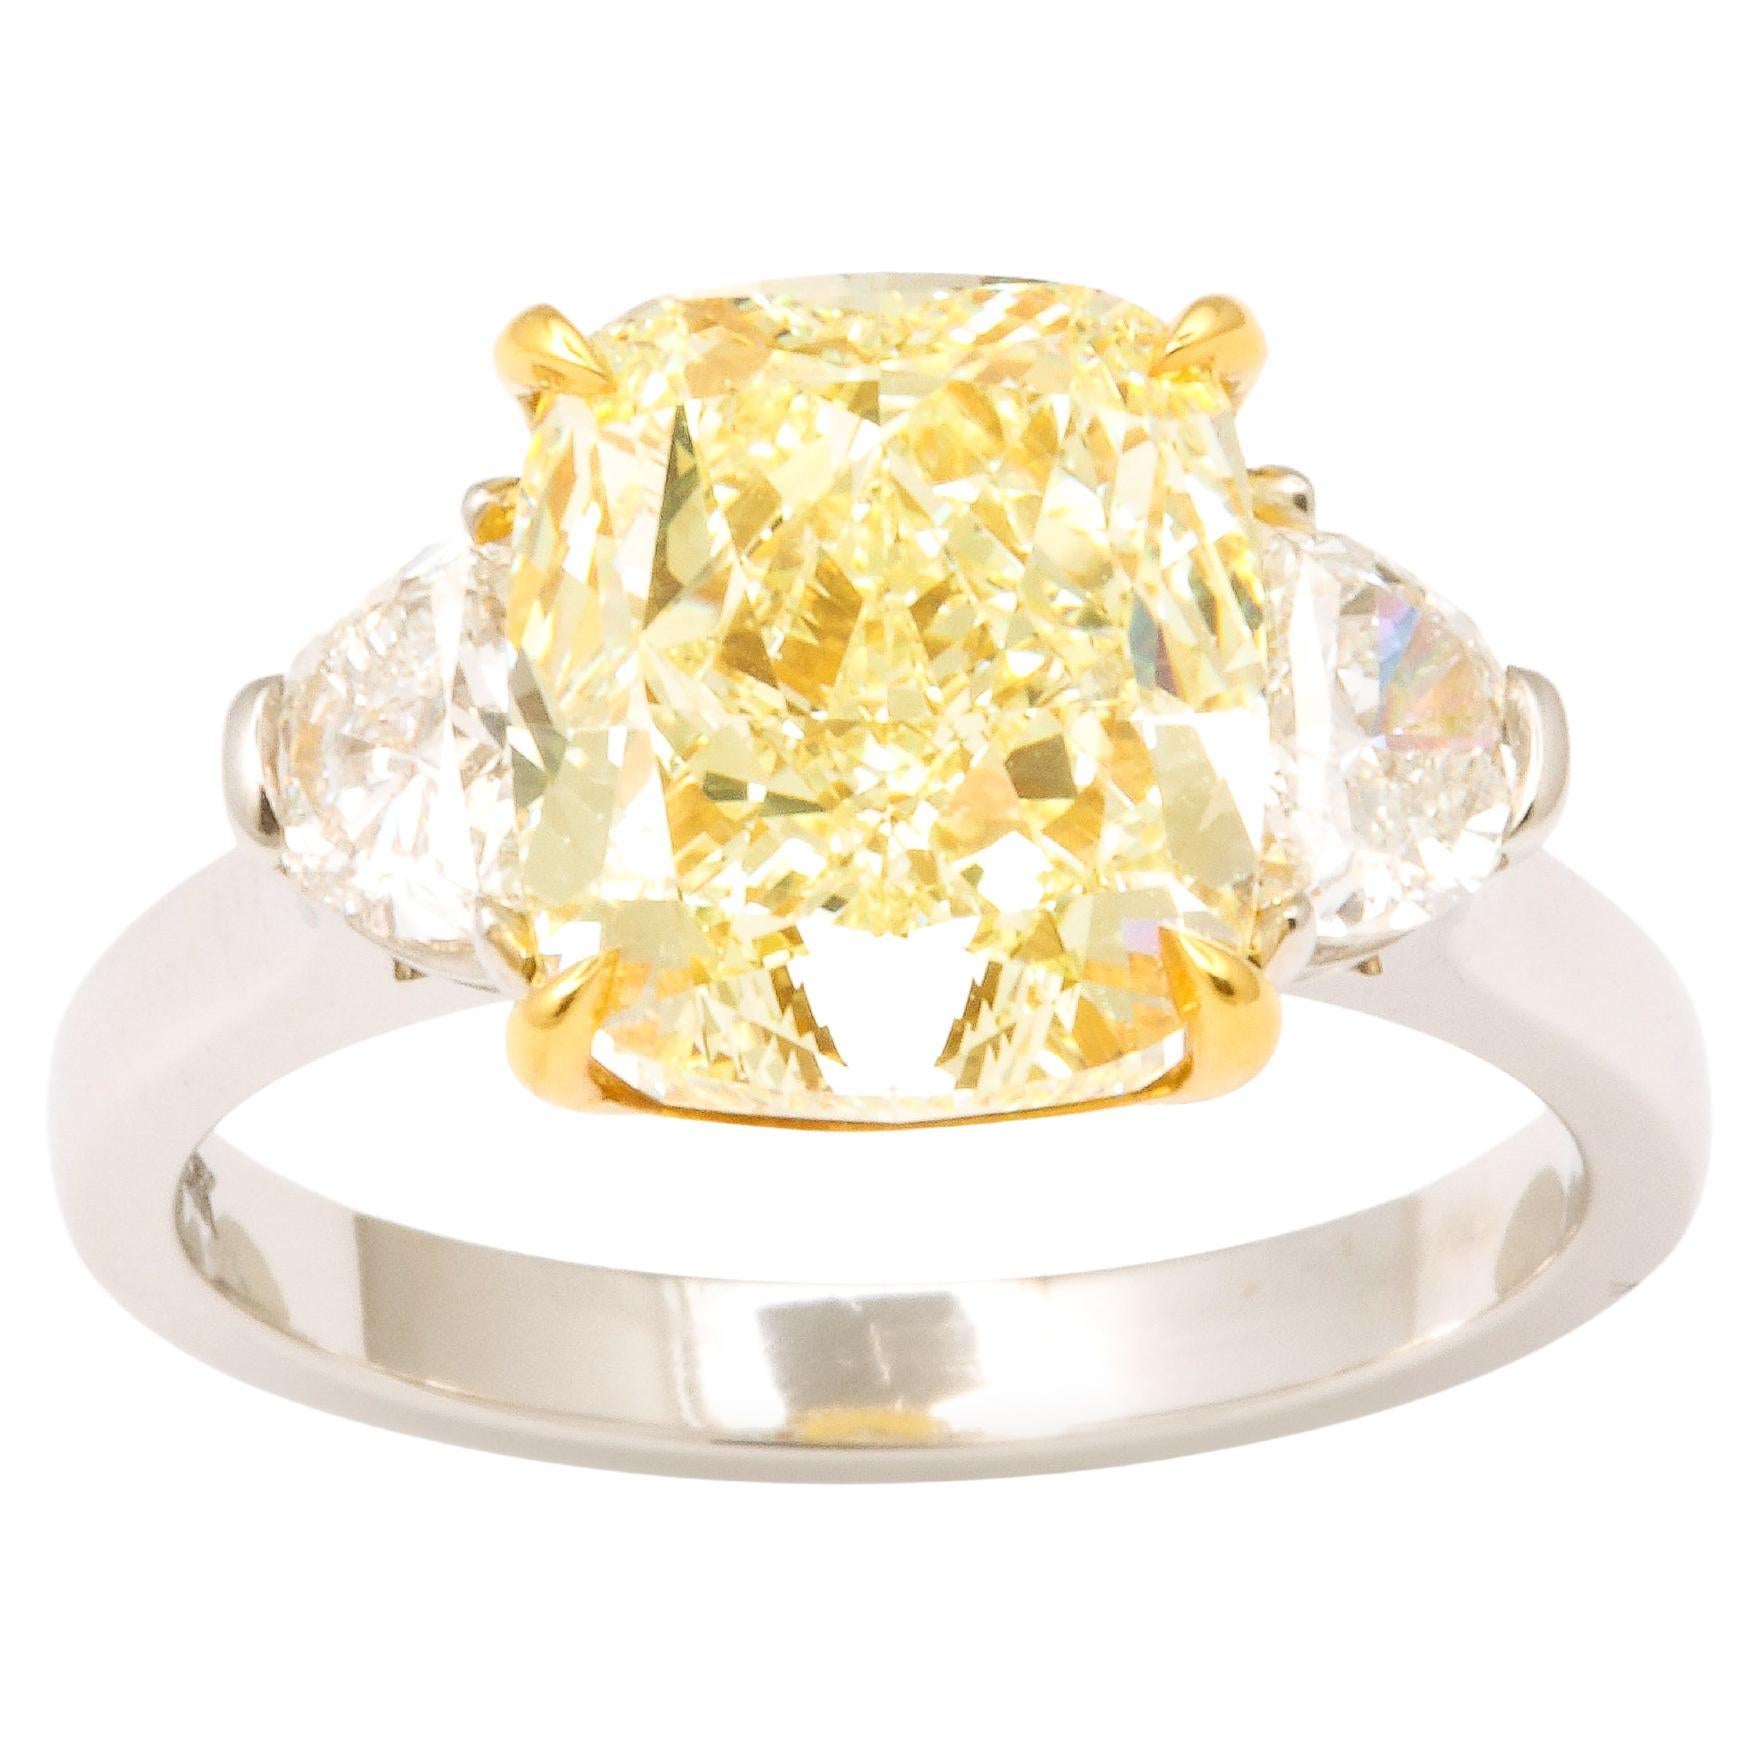 5 carat Yellow Diamond Ring  For Sale